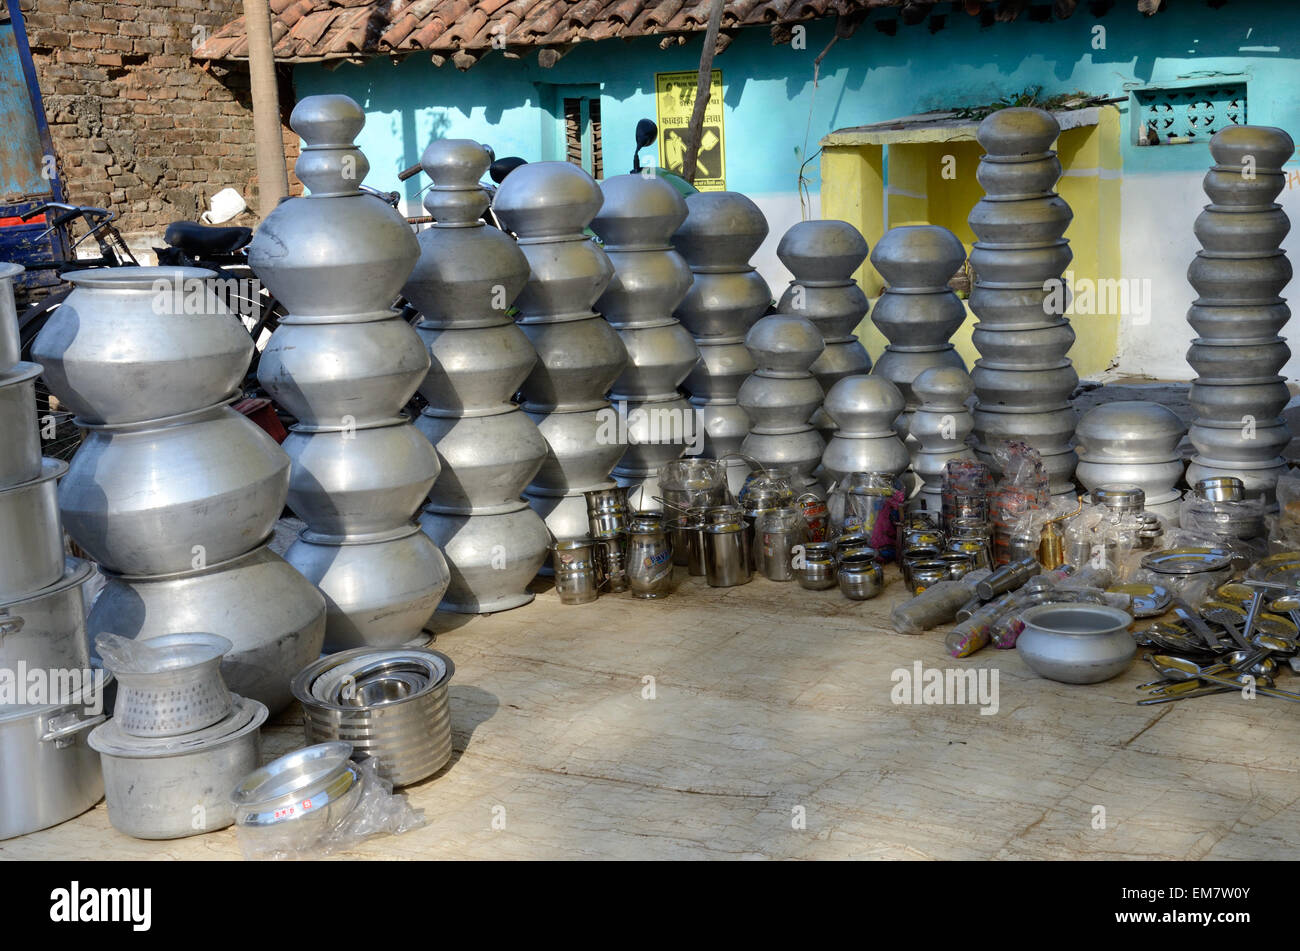 https://c8.alamy.com/comp/EM7W0Y/stacks-of-indian-cooking-pots-for-sale-at-a-local-market-madhya-pradesh-EM7W0Y.jpg